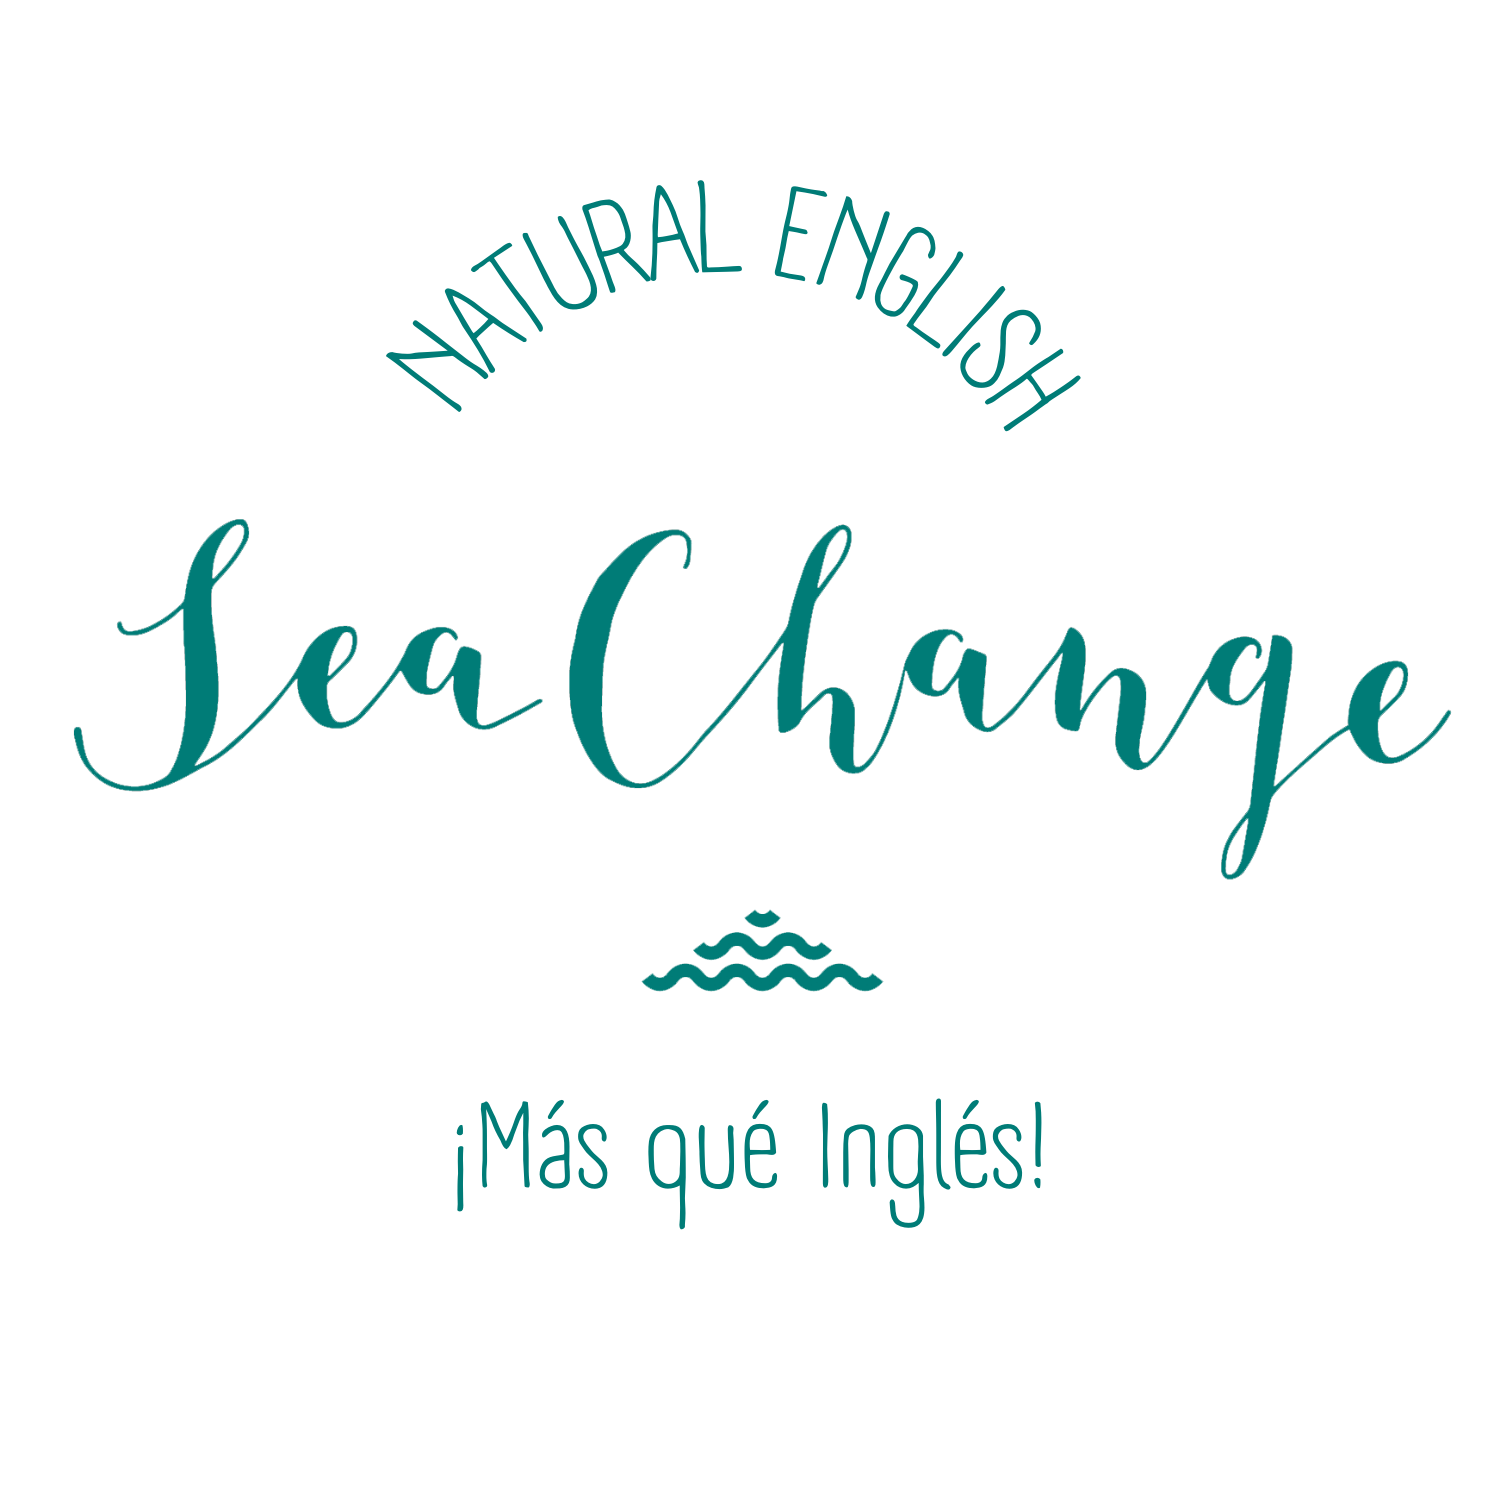 SEA CHANGE NATURAL ENGLISH